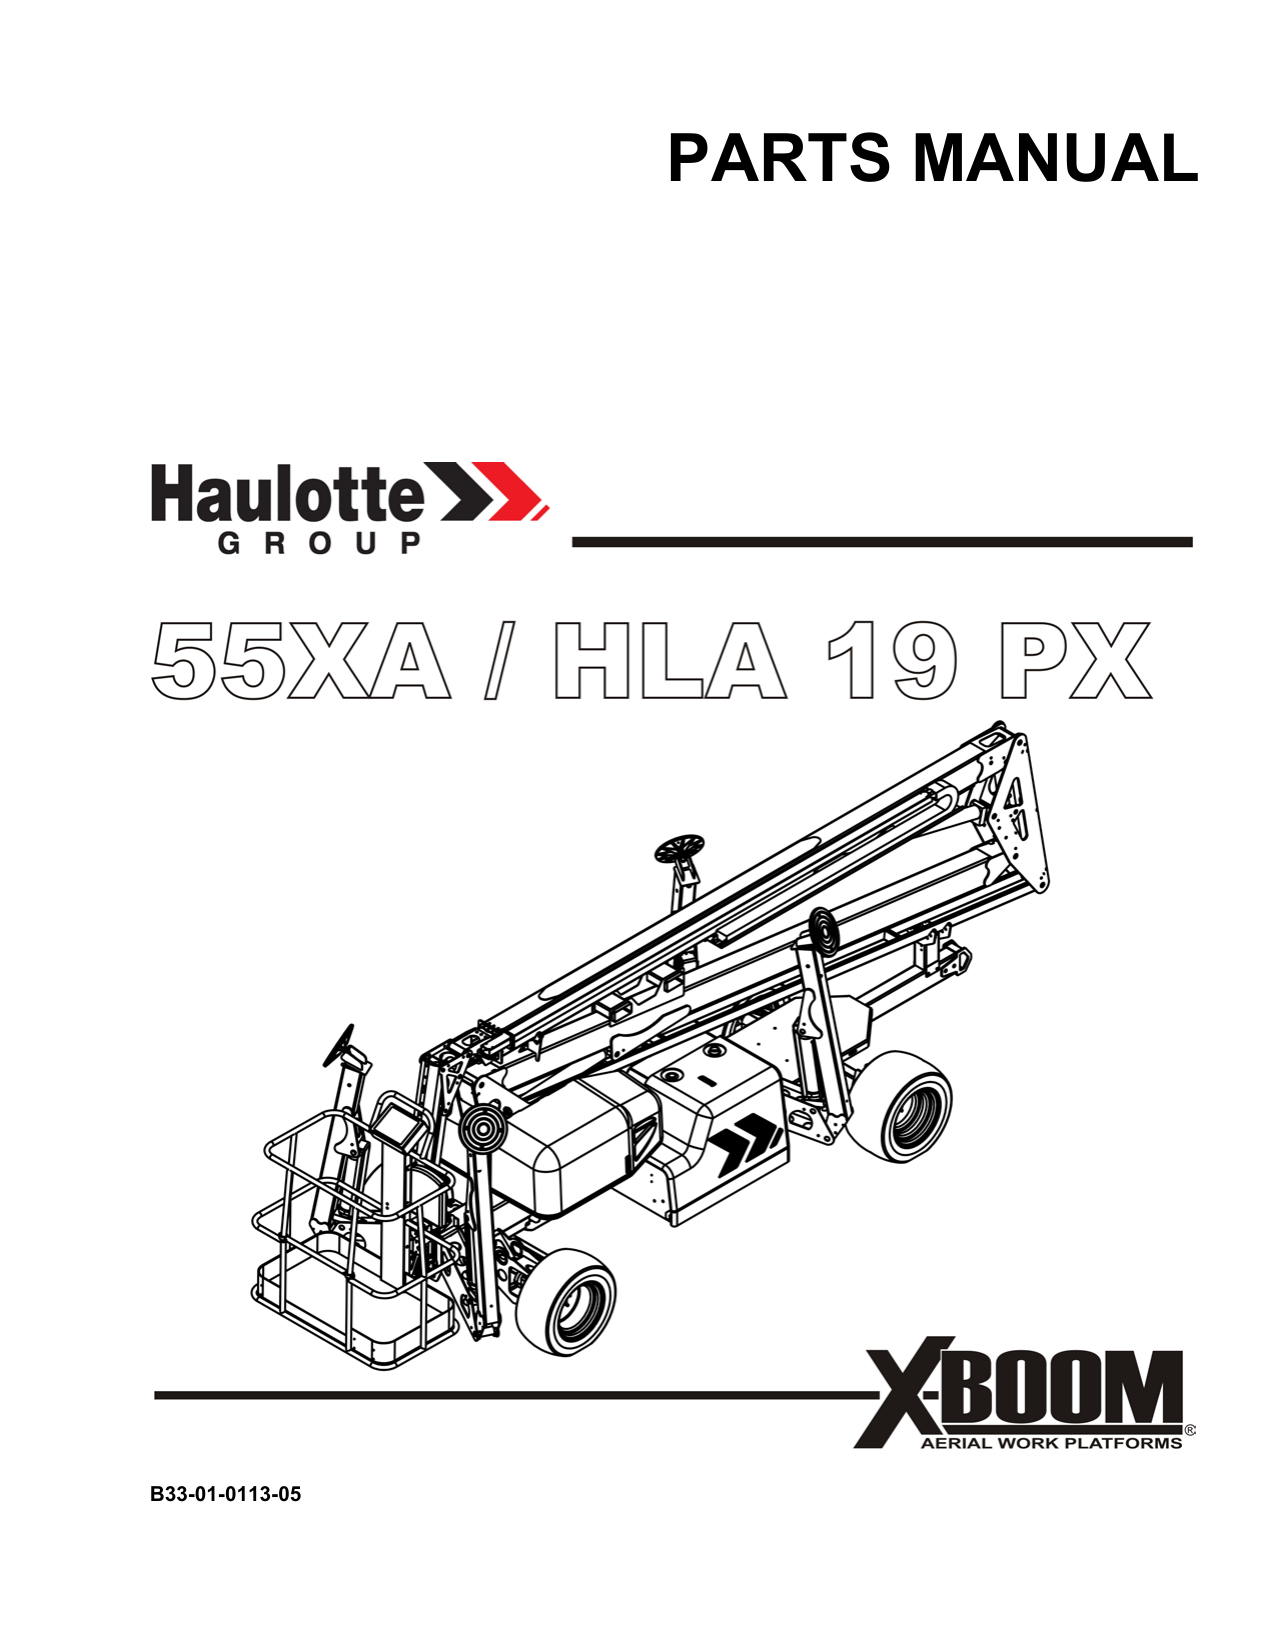 1/8" Cable Assembly A-03187 Factory OEM 4527A Haulotte Parking Brake Bil-Jax 